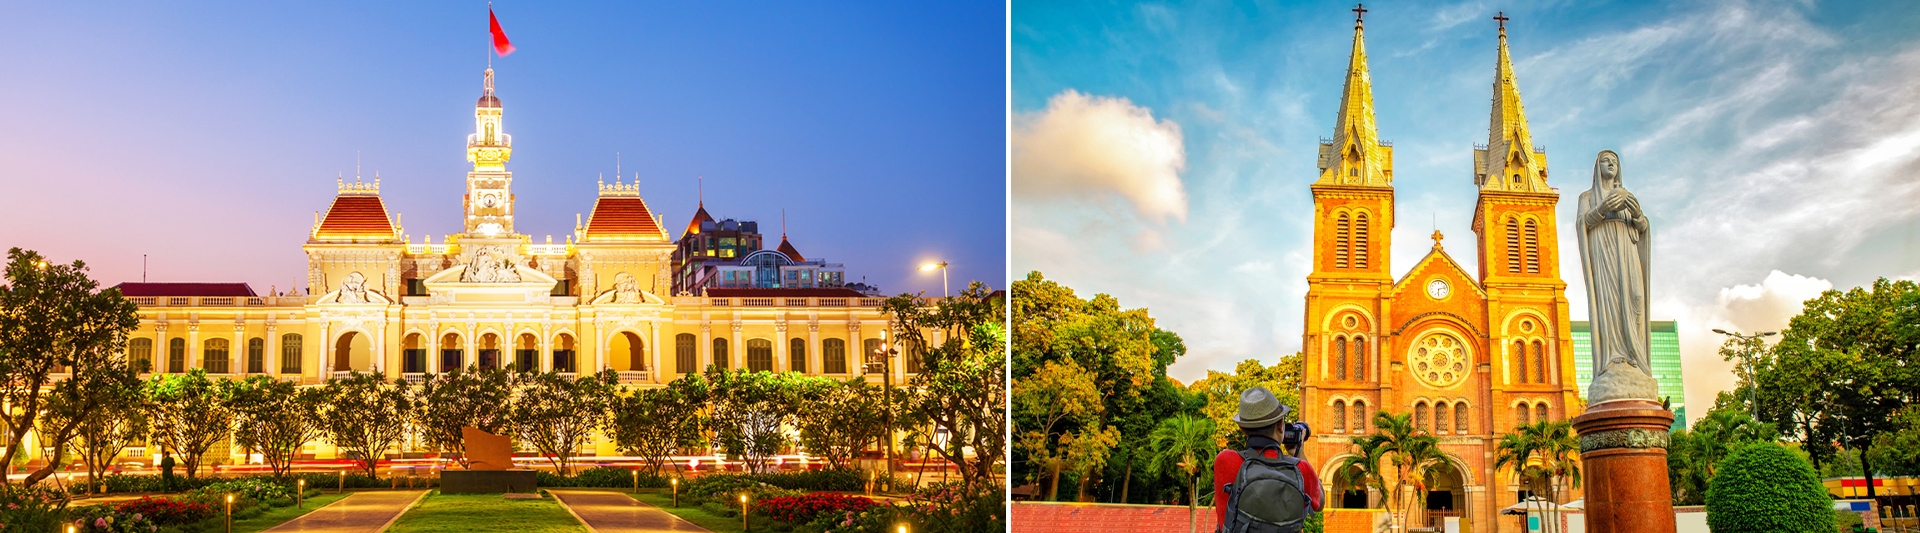 Ho Chi Minh City Travel Guide